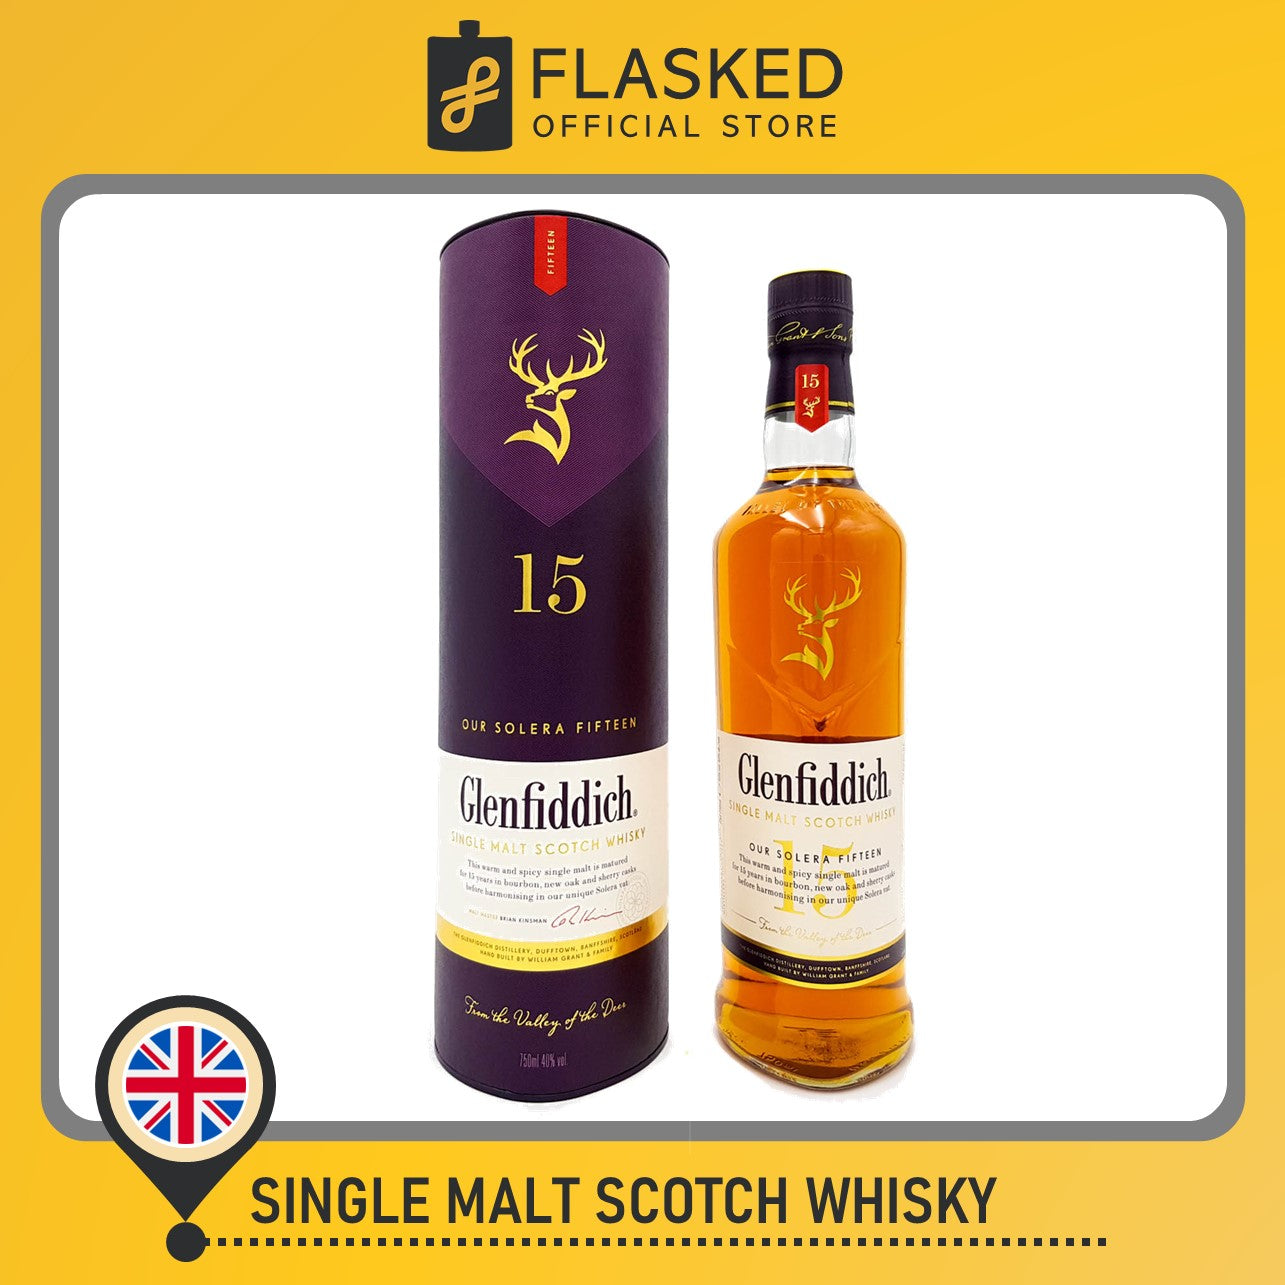 Glenfiddich 15 Year Old Whisky 700ml